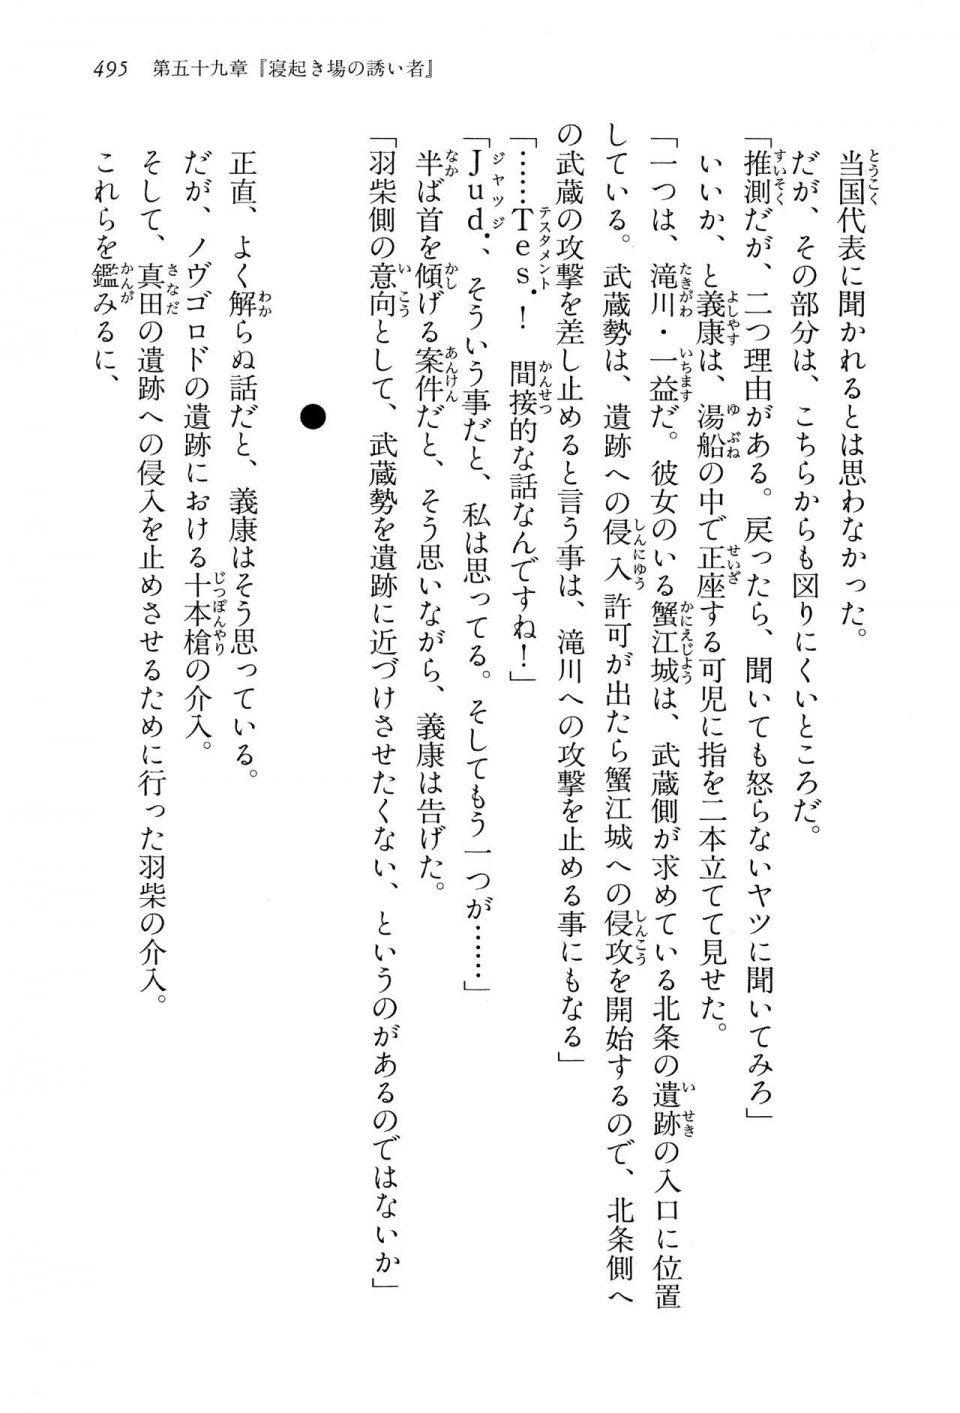 Kyoukai Senjou no Horizon LN Vol 15(6C) Part 1 - Photo #495